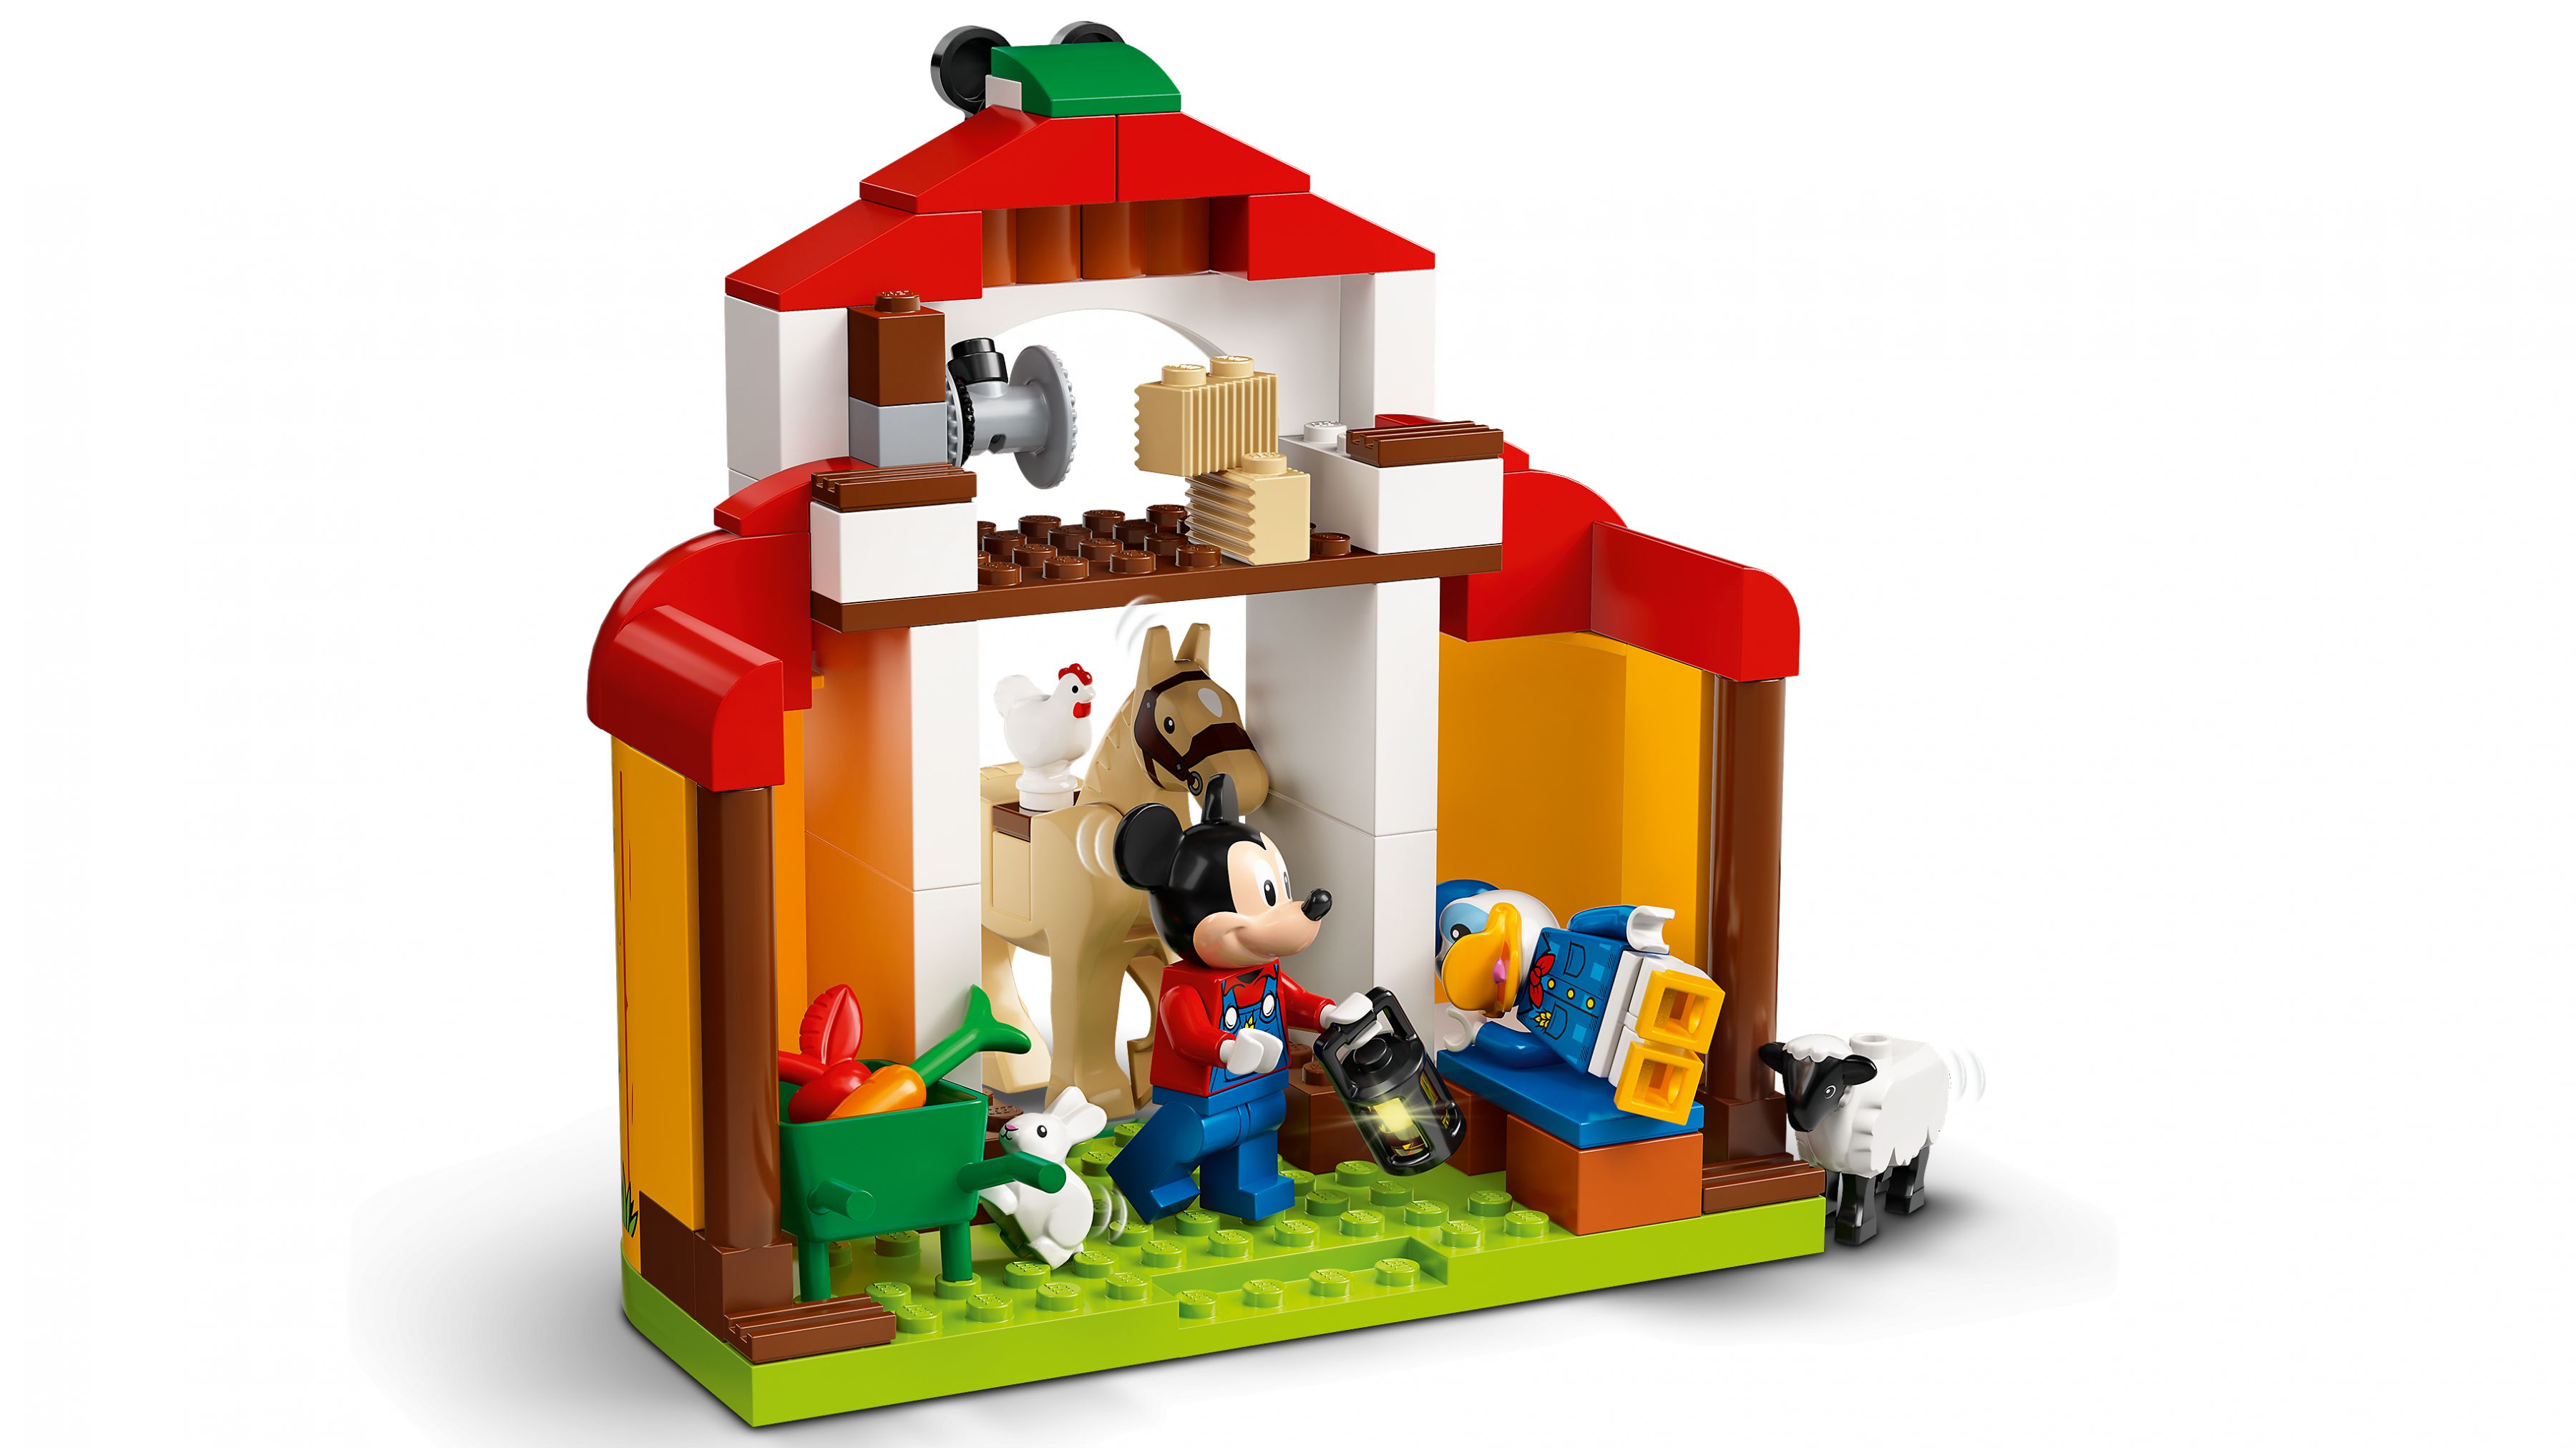 LEGO Disney 10775 Mickys und Donald Duck's Farm LEGO_10775_web_sec02_nobg.jpg